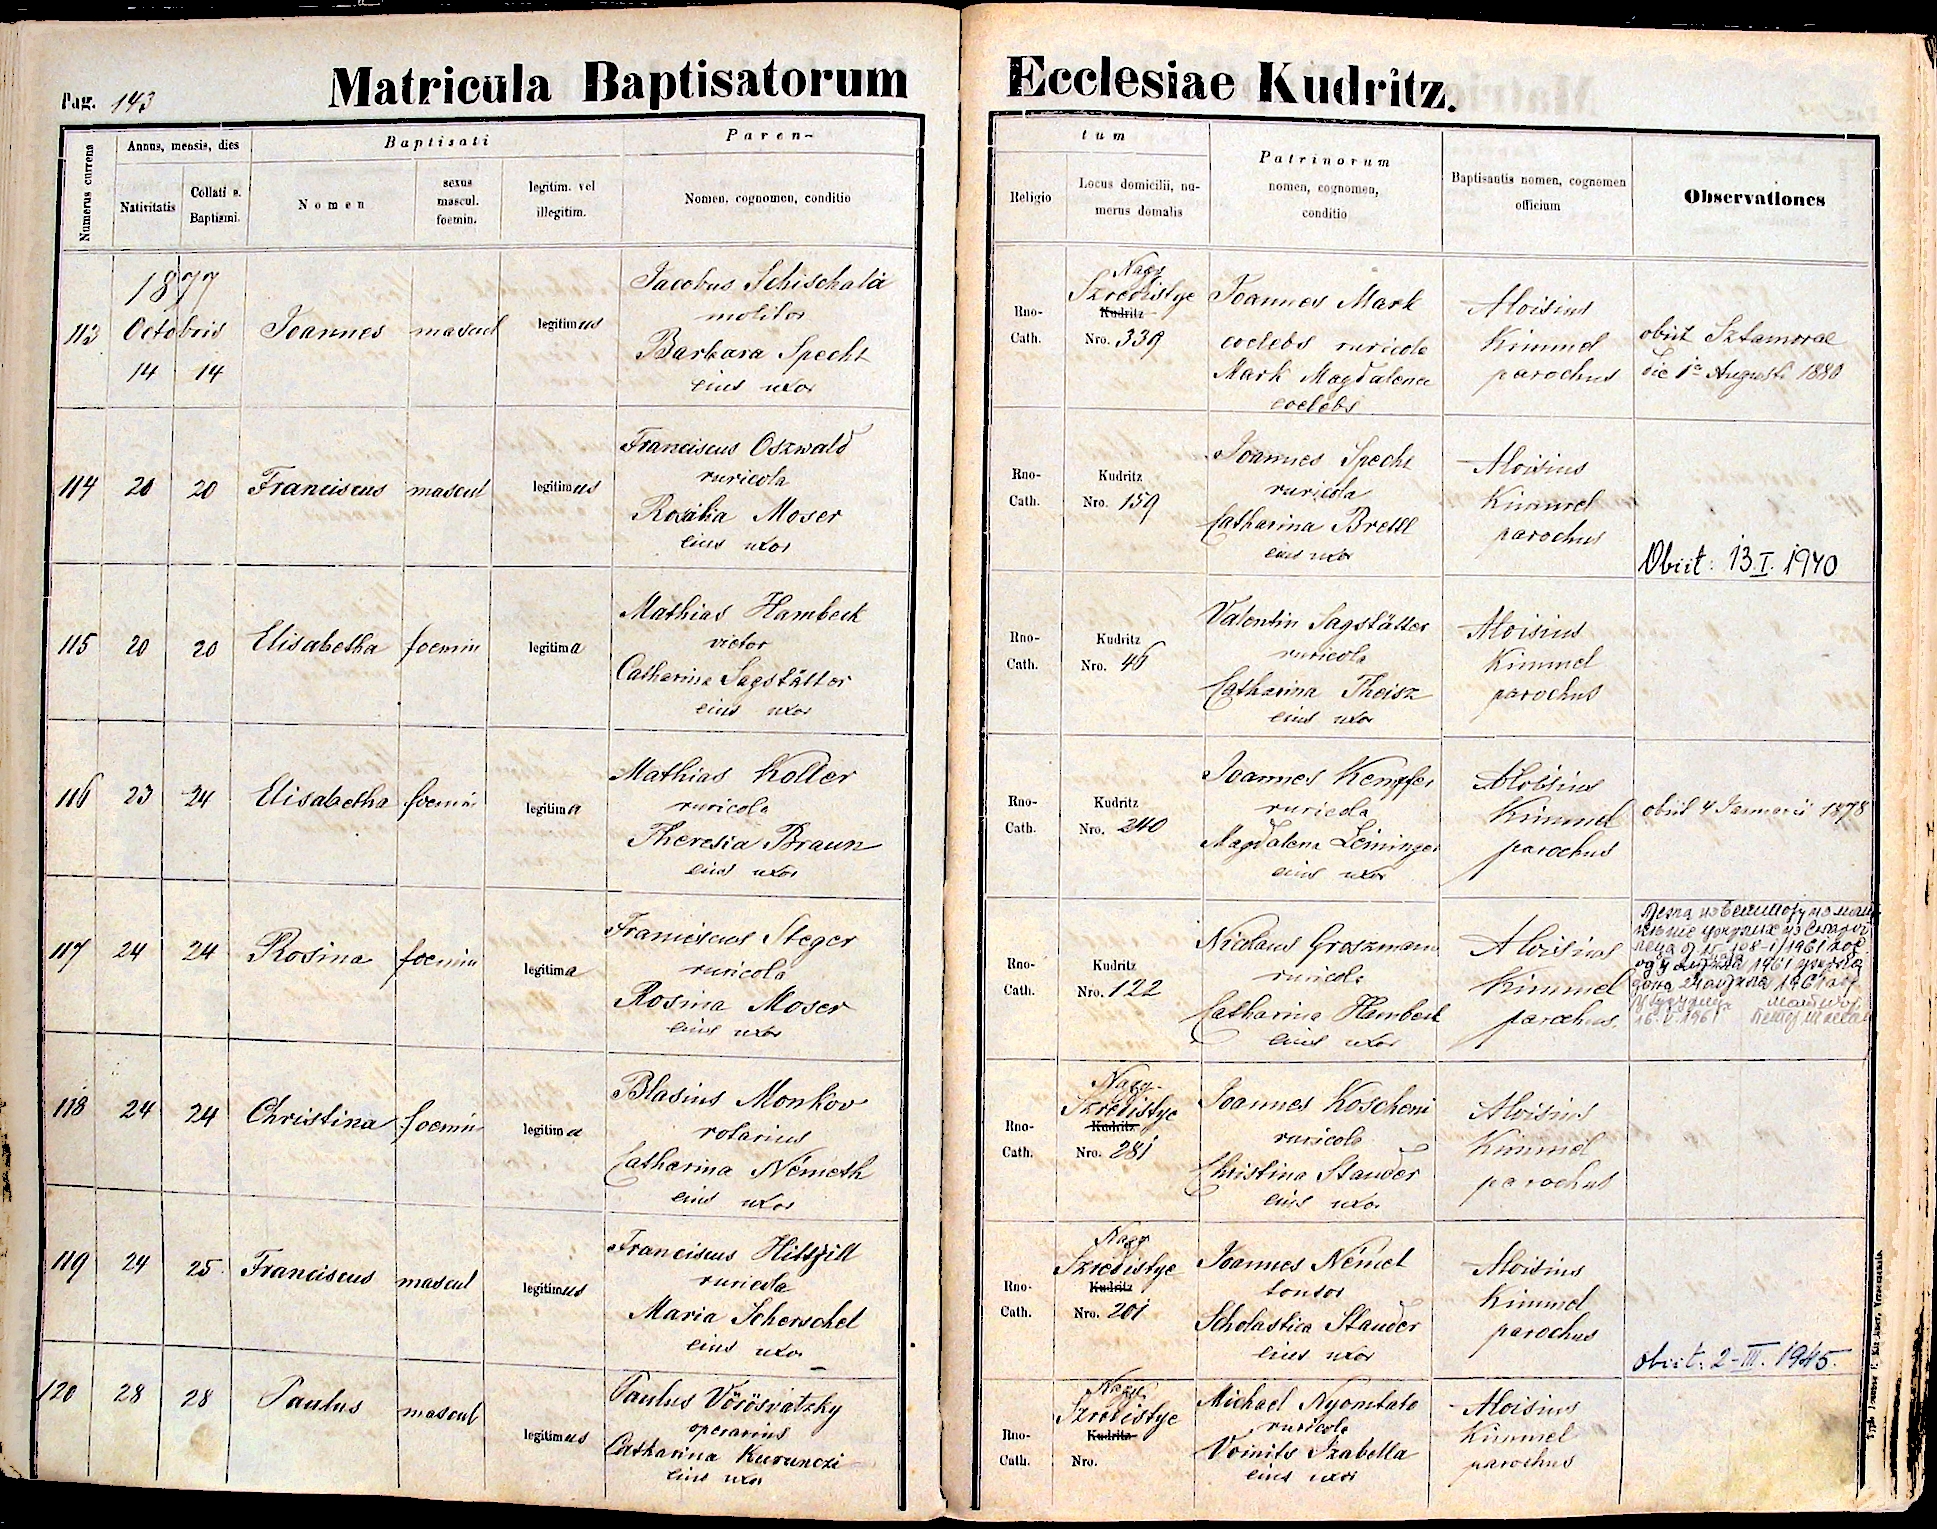 images/church_records/BIRTHS/1870-1879B/1877/143